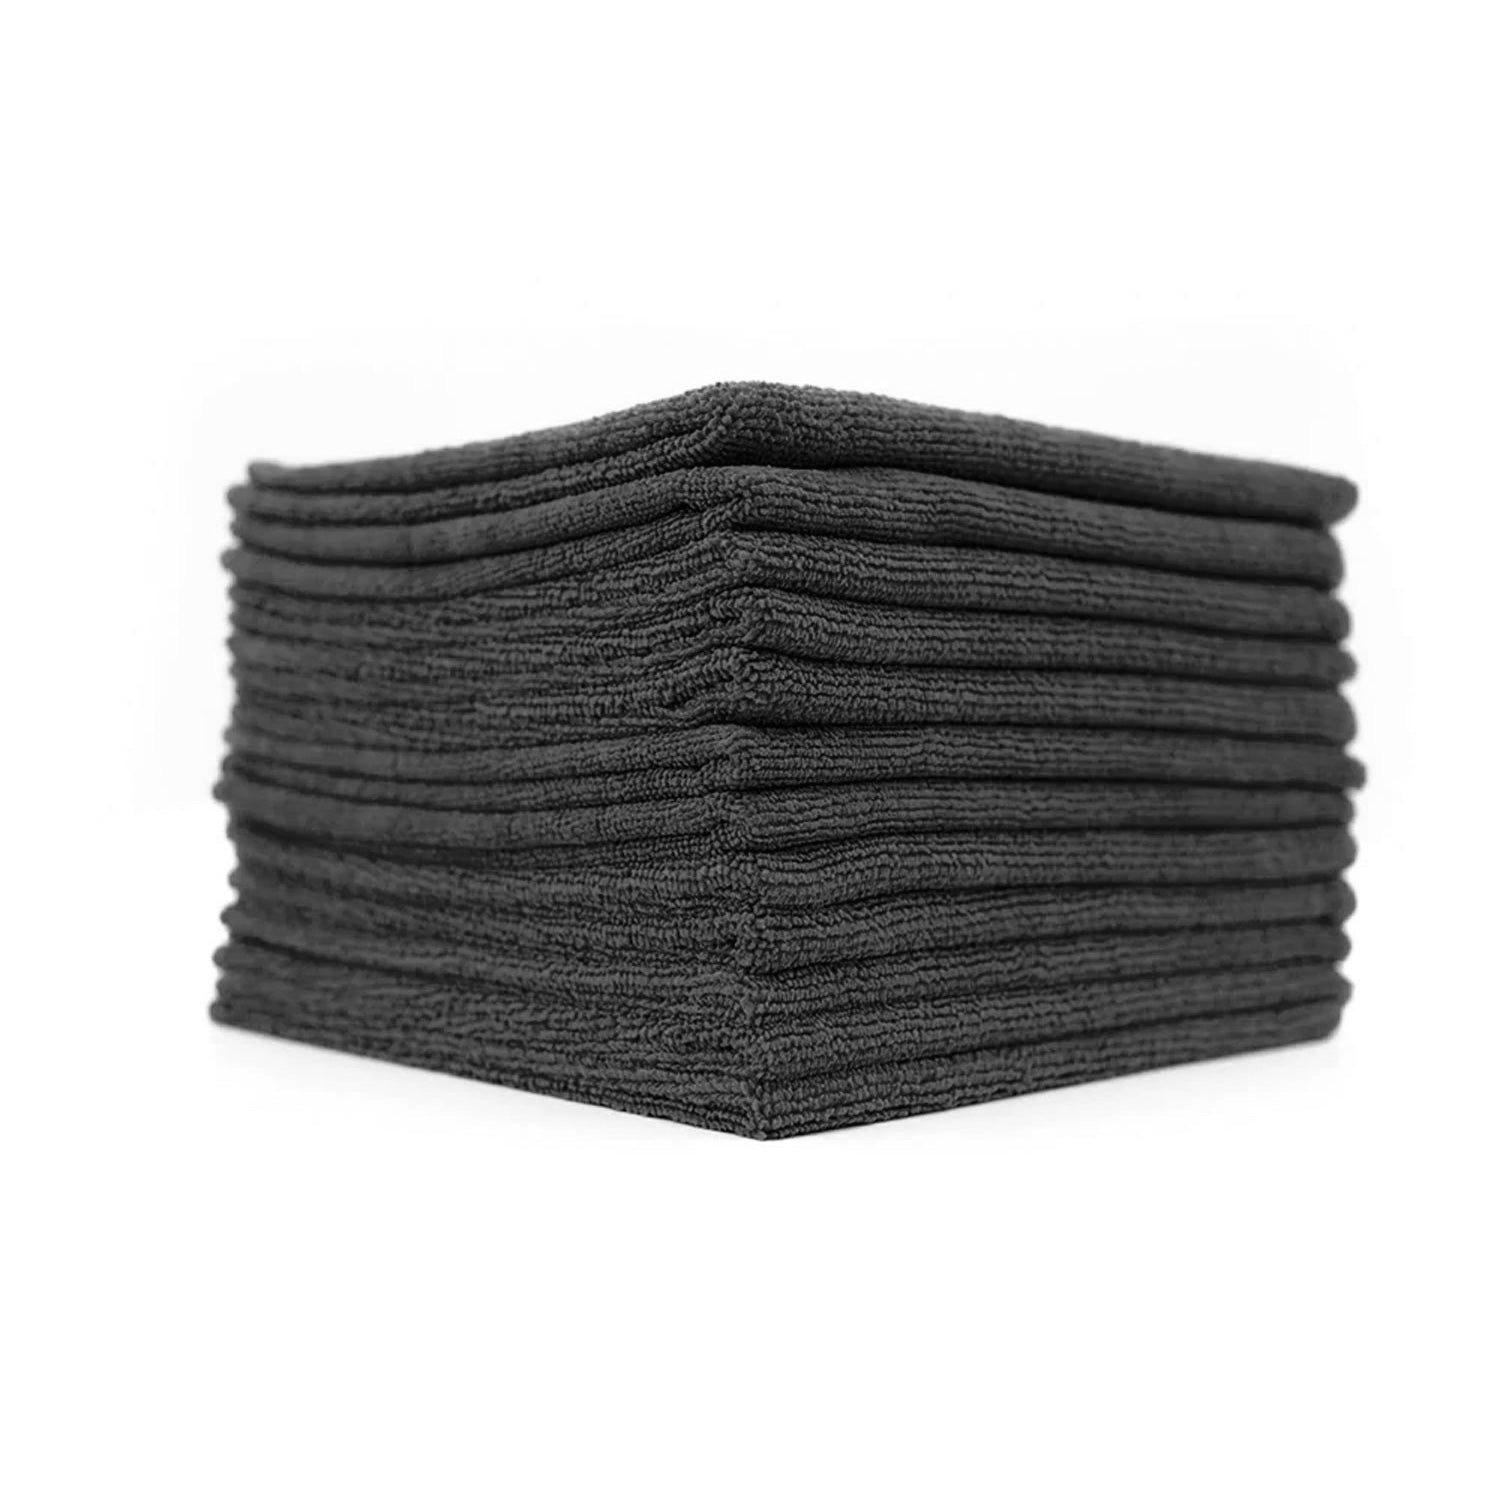 black-microfiber-towel-10-pack-towels